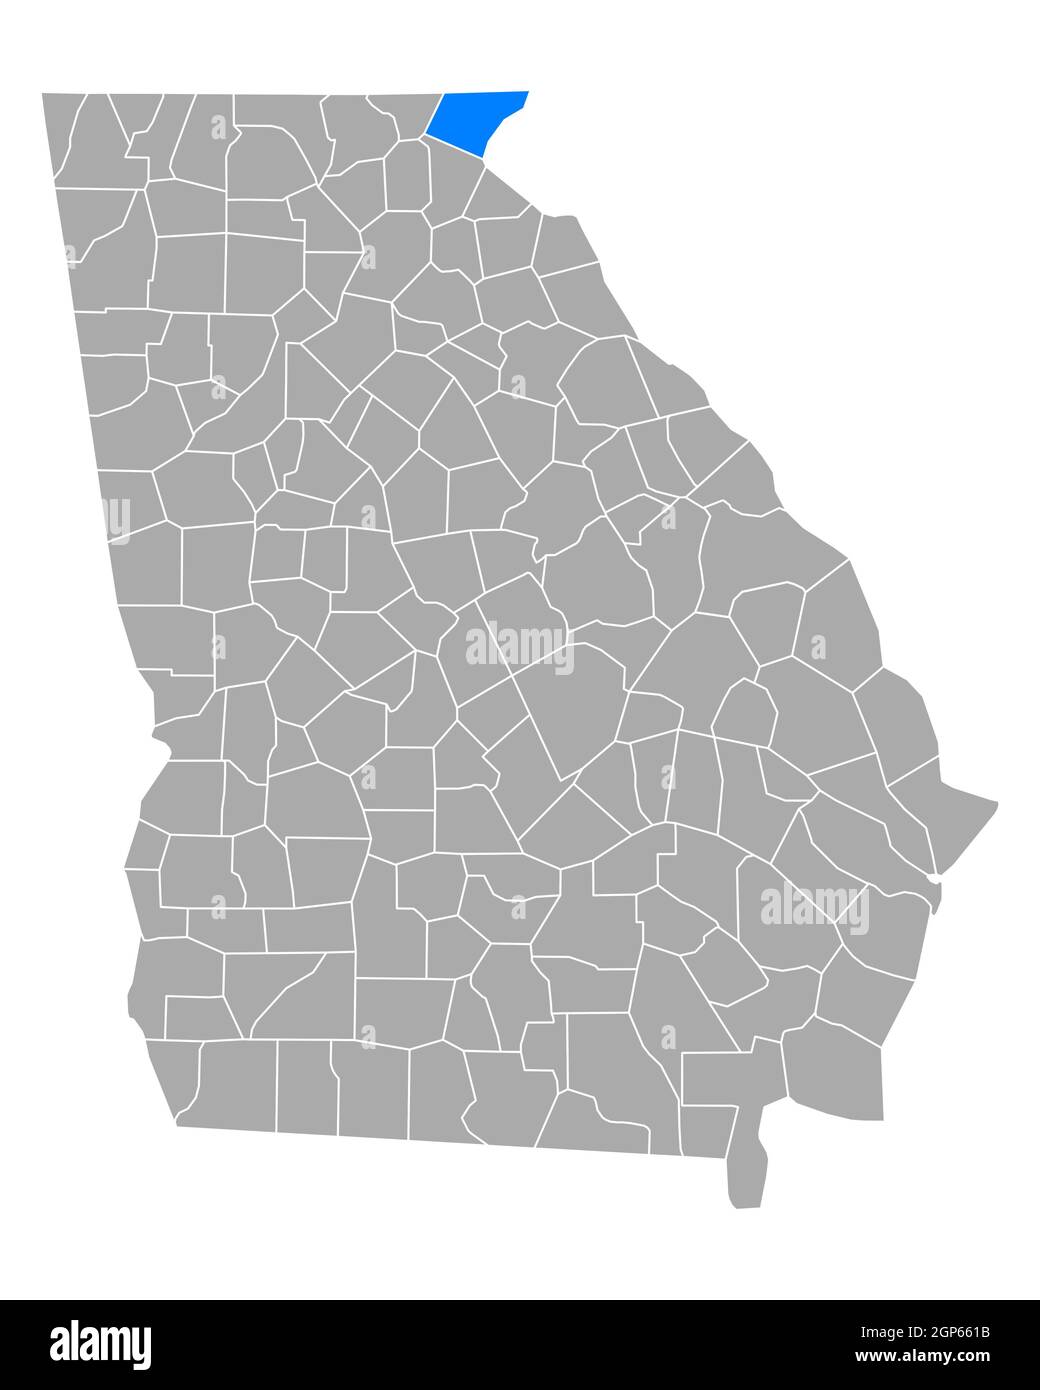 Karte von Rabun in Georgien Stockfoto